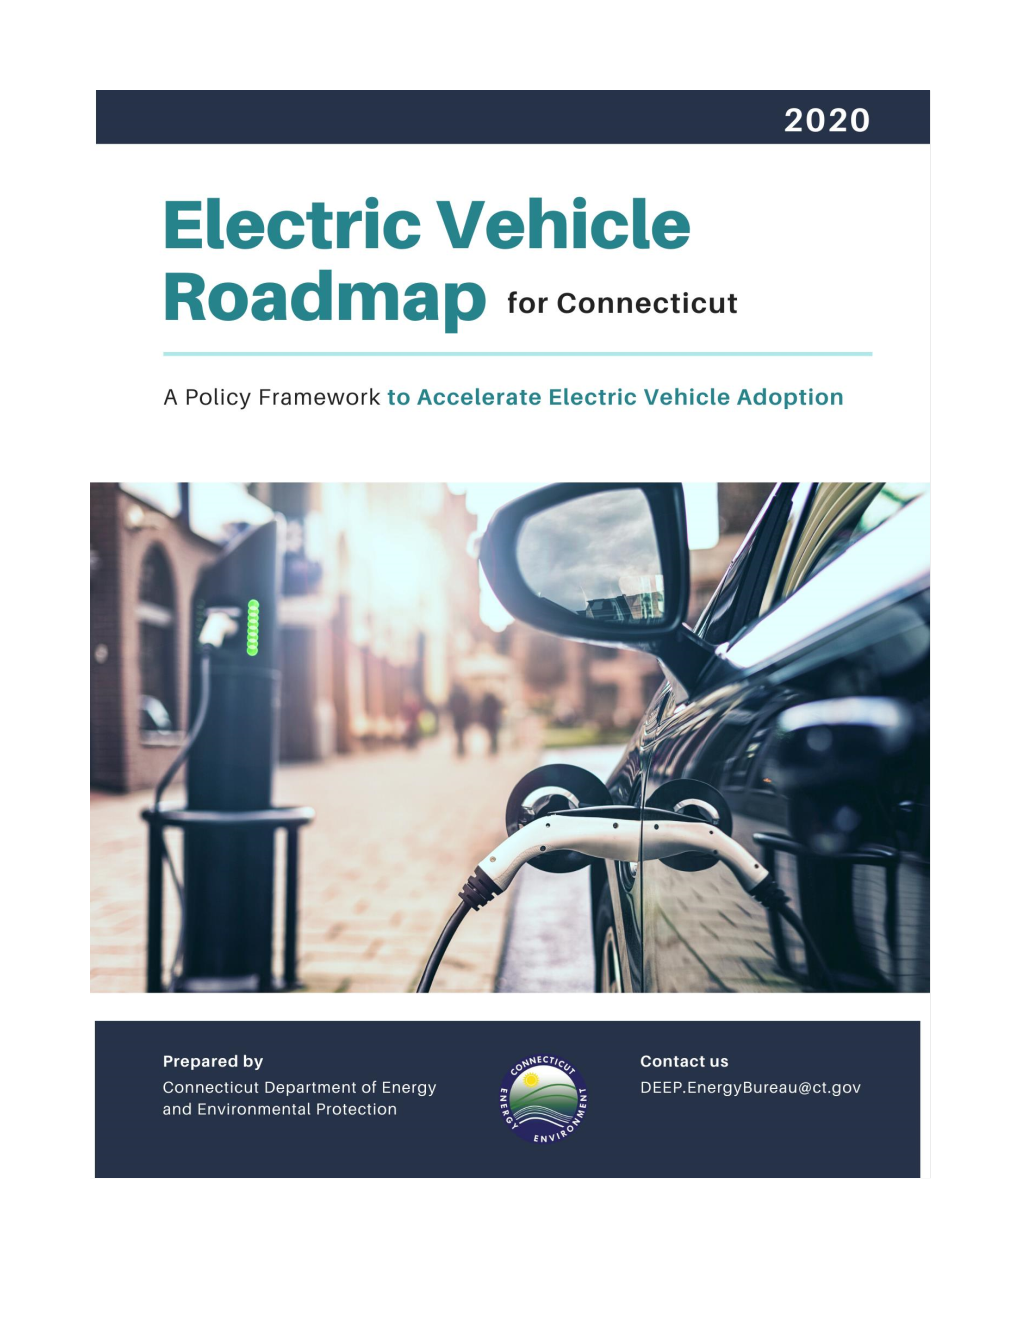 Electric Vehicle Roadmap for Connecticut (EV Roadmap)